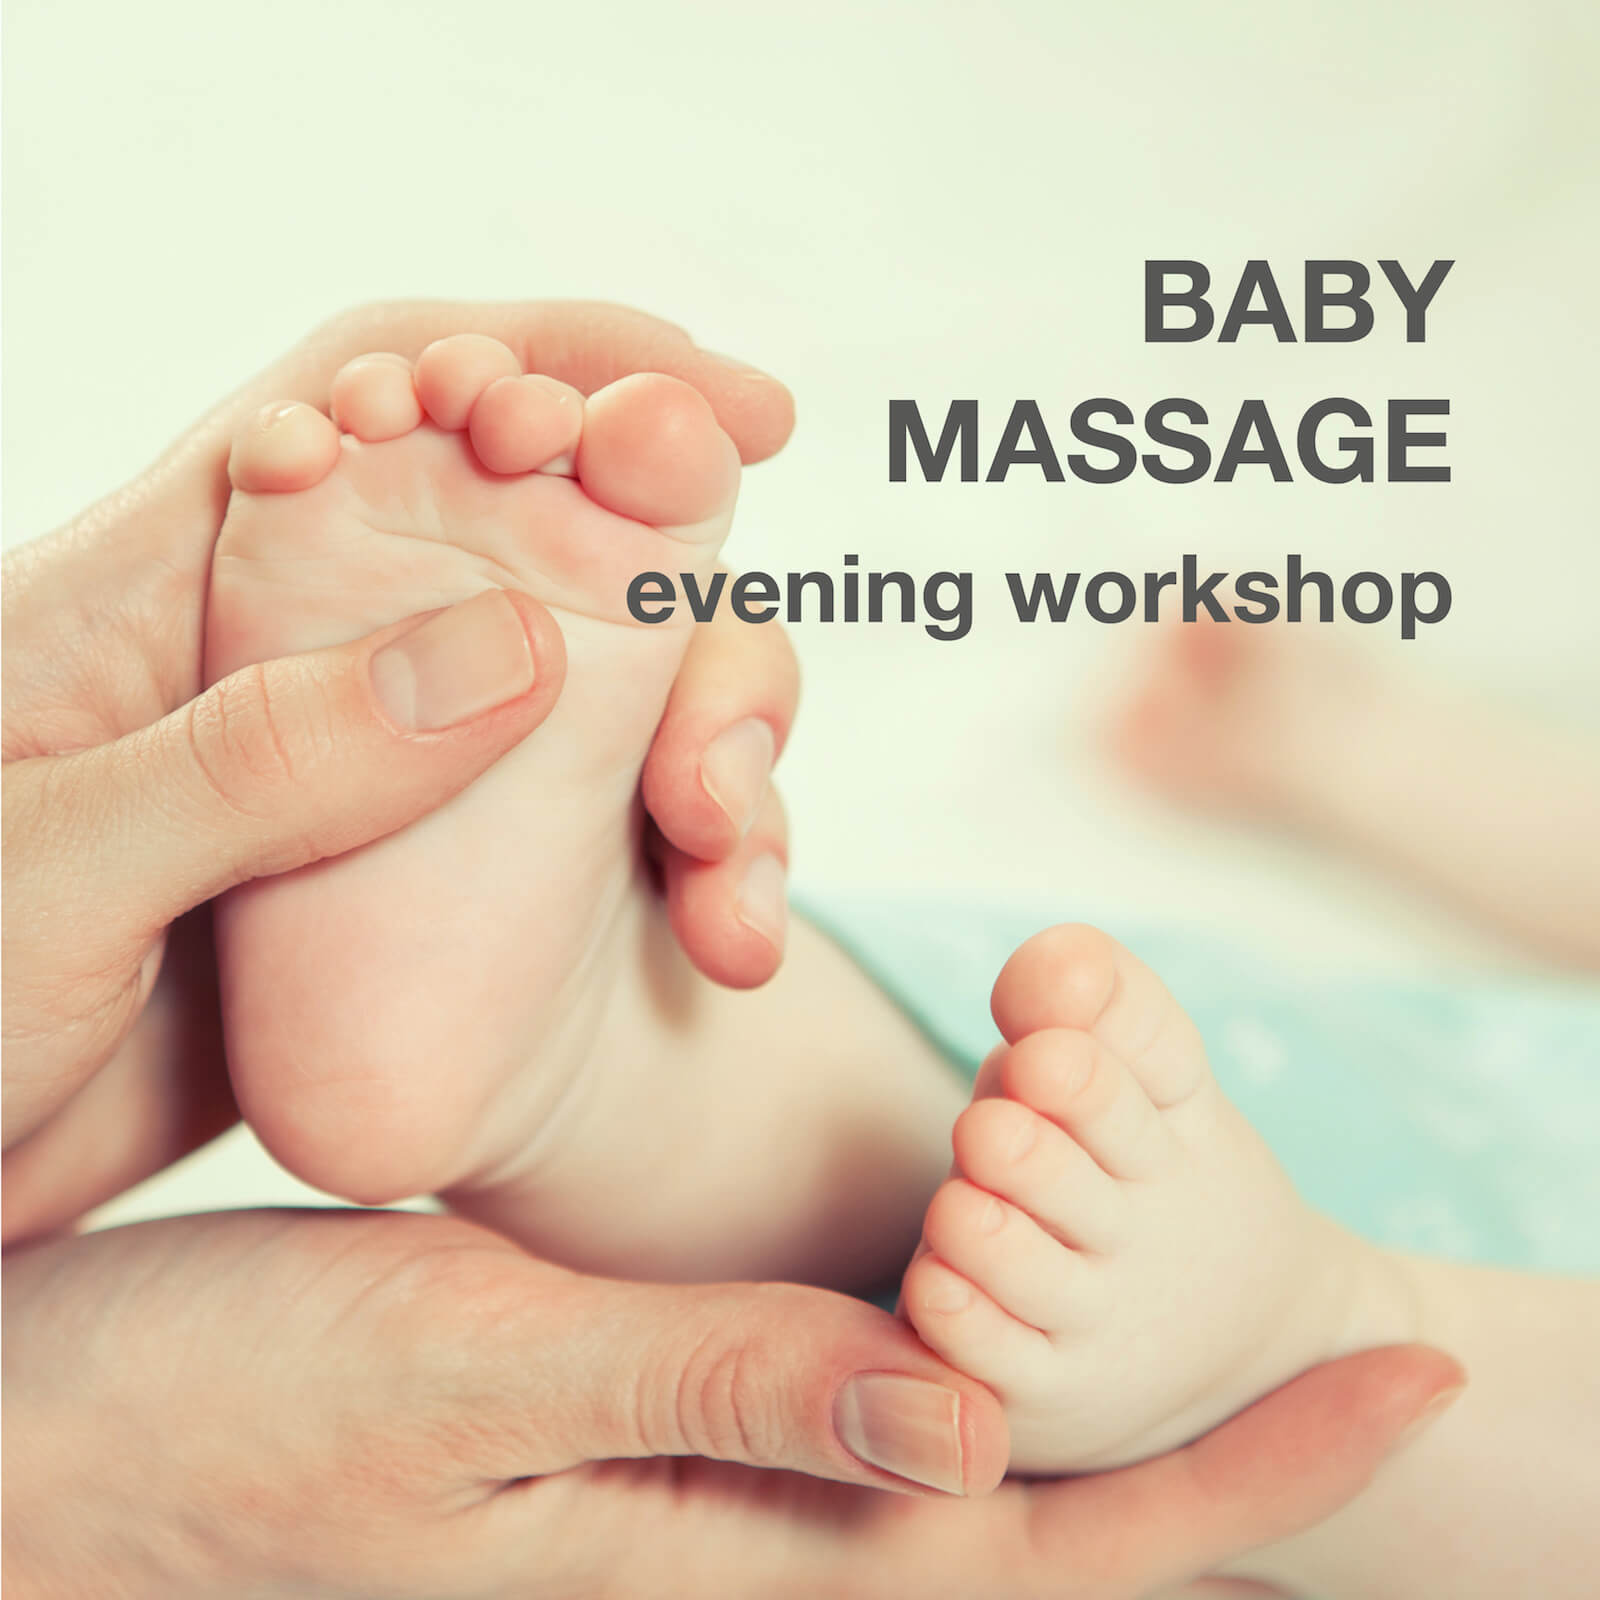 BABY MASSAGE – Evening seminar / workshop for nannies / matertniy nurses